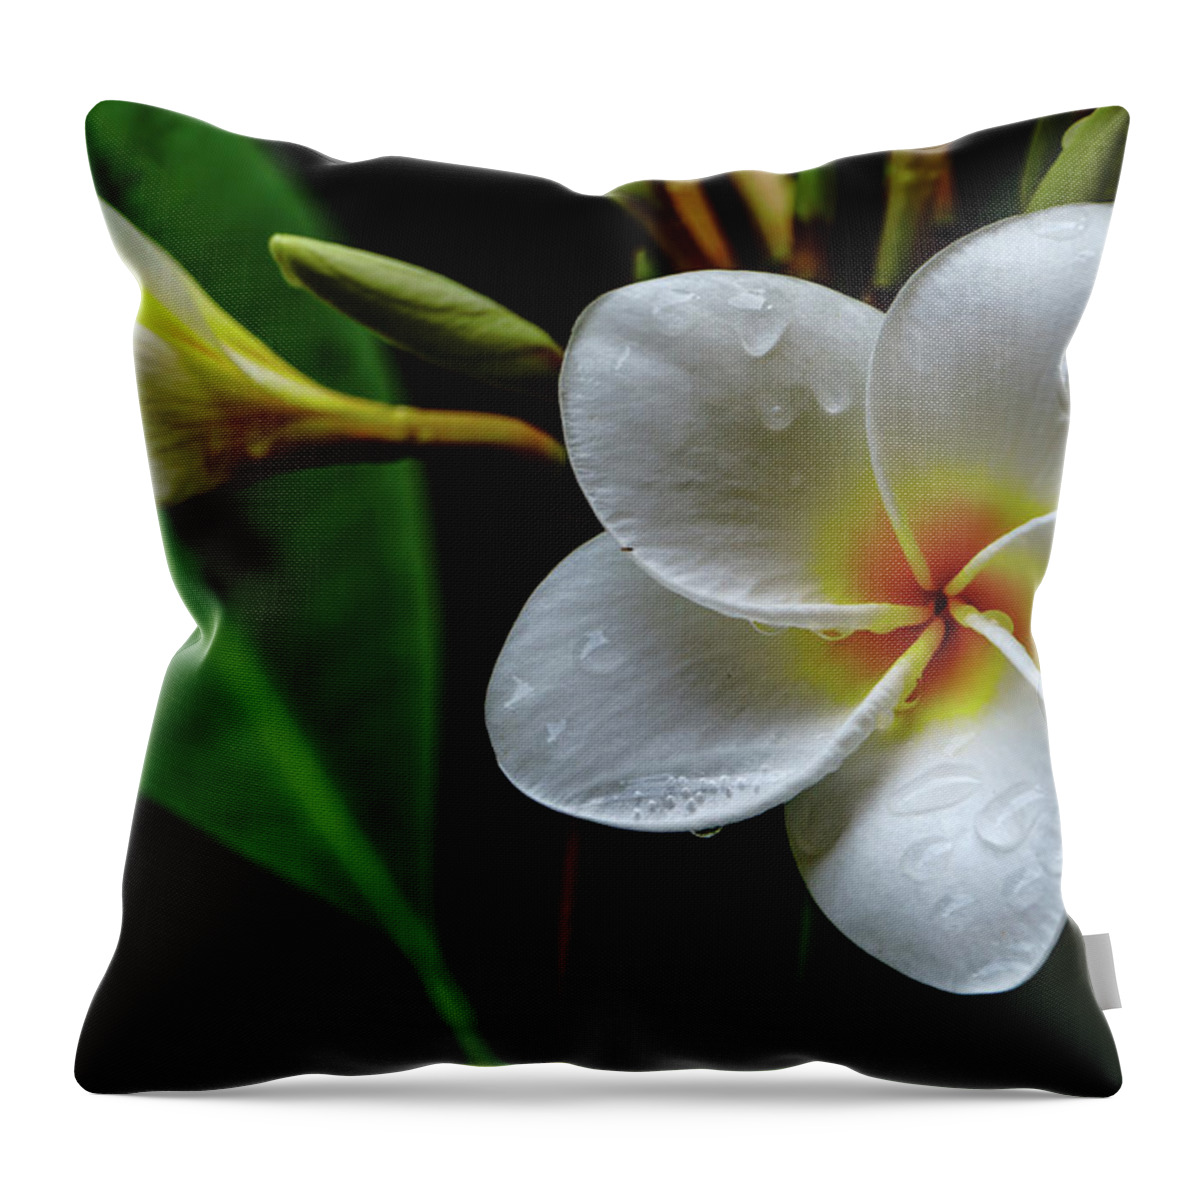 Hawaii Throw Pillow featuring the photograph Wet Plumeria Flower by John Bauer